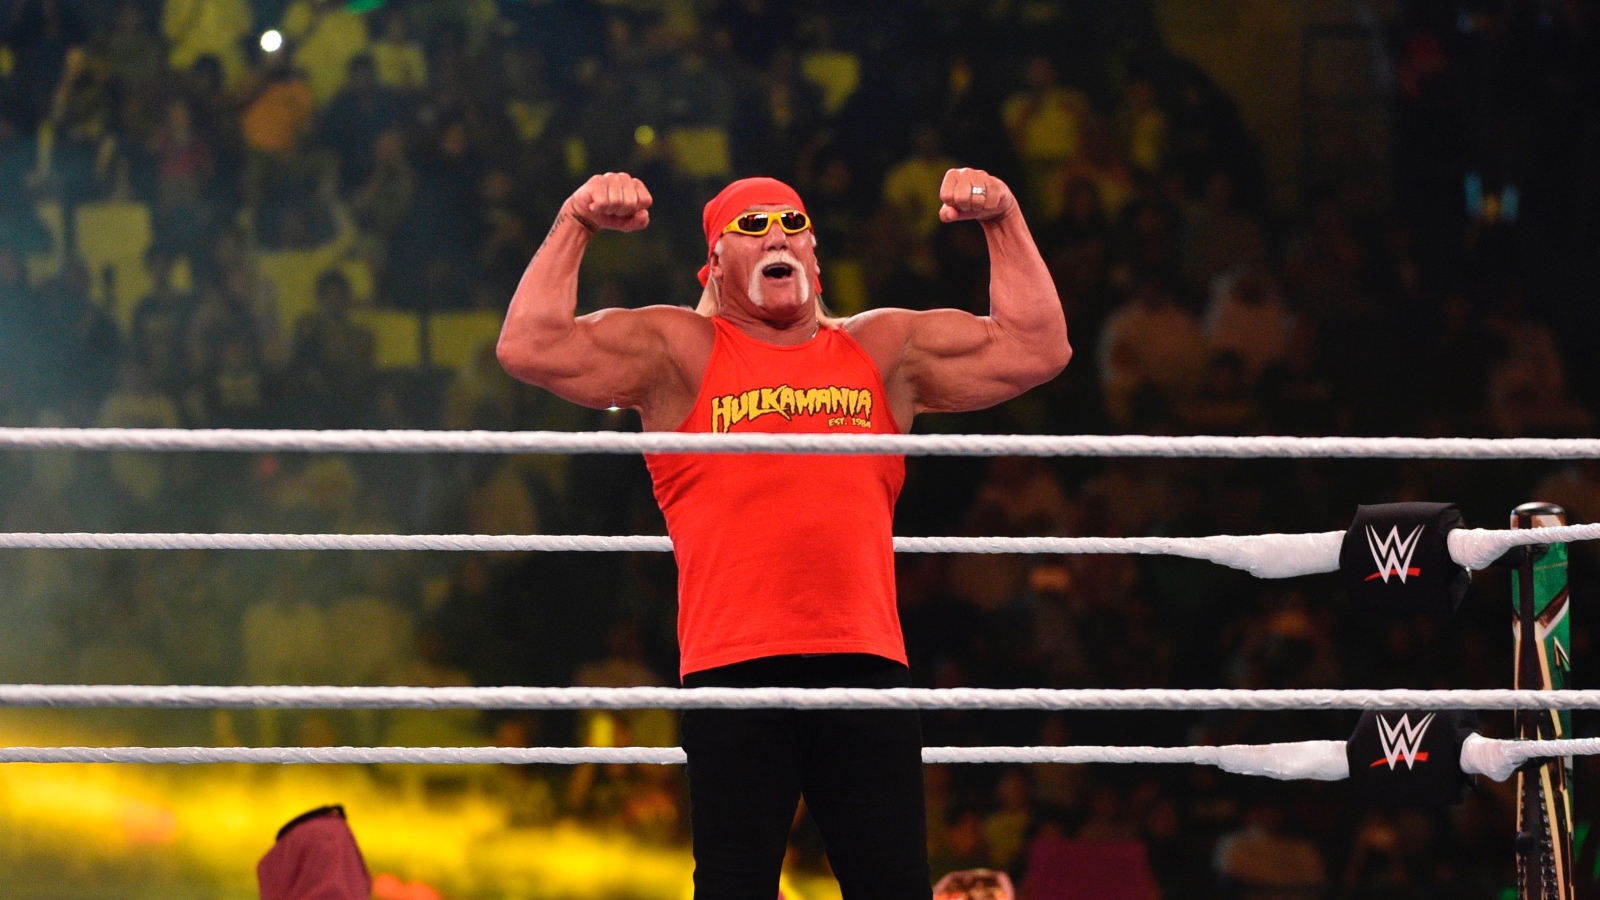 former WWE wrestler Hulk Hogan